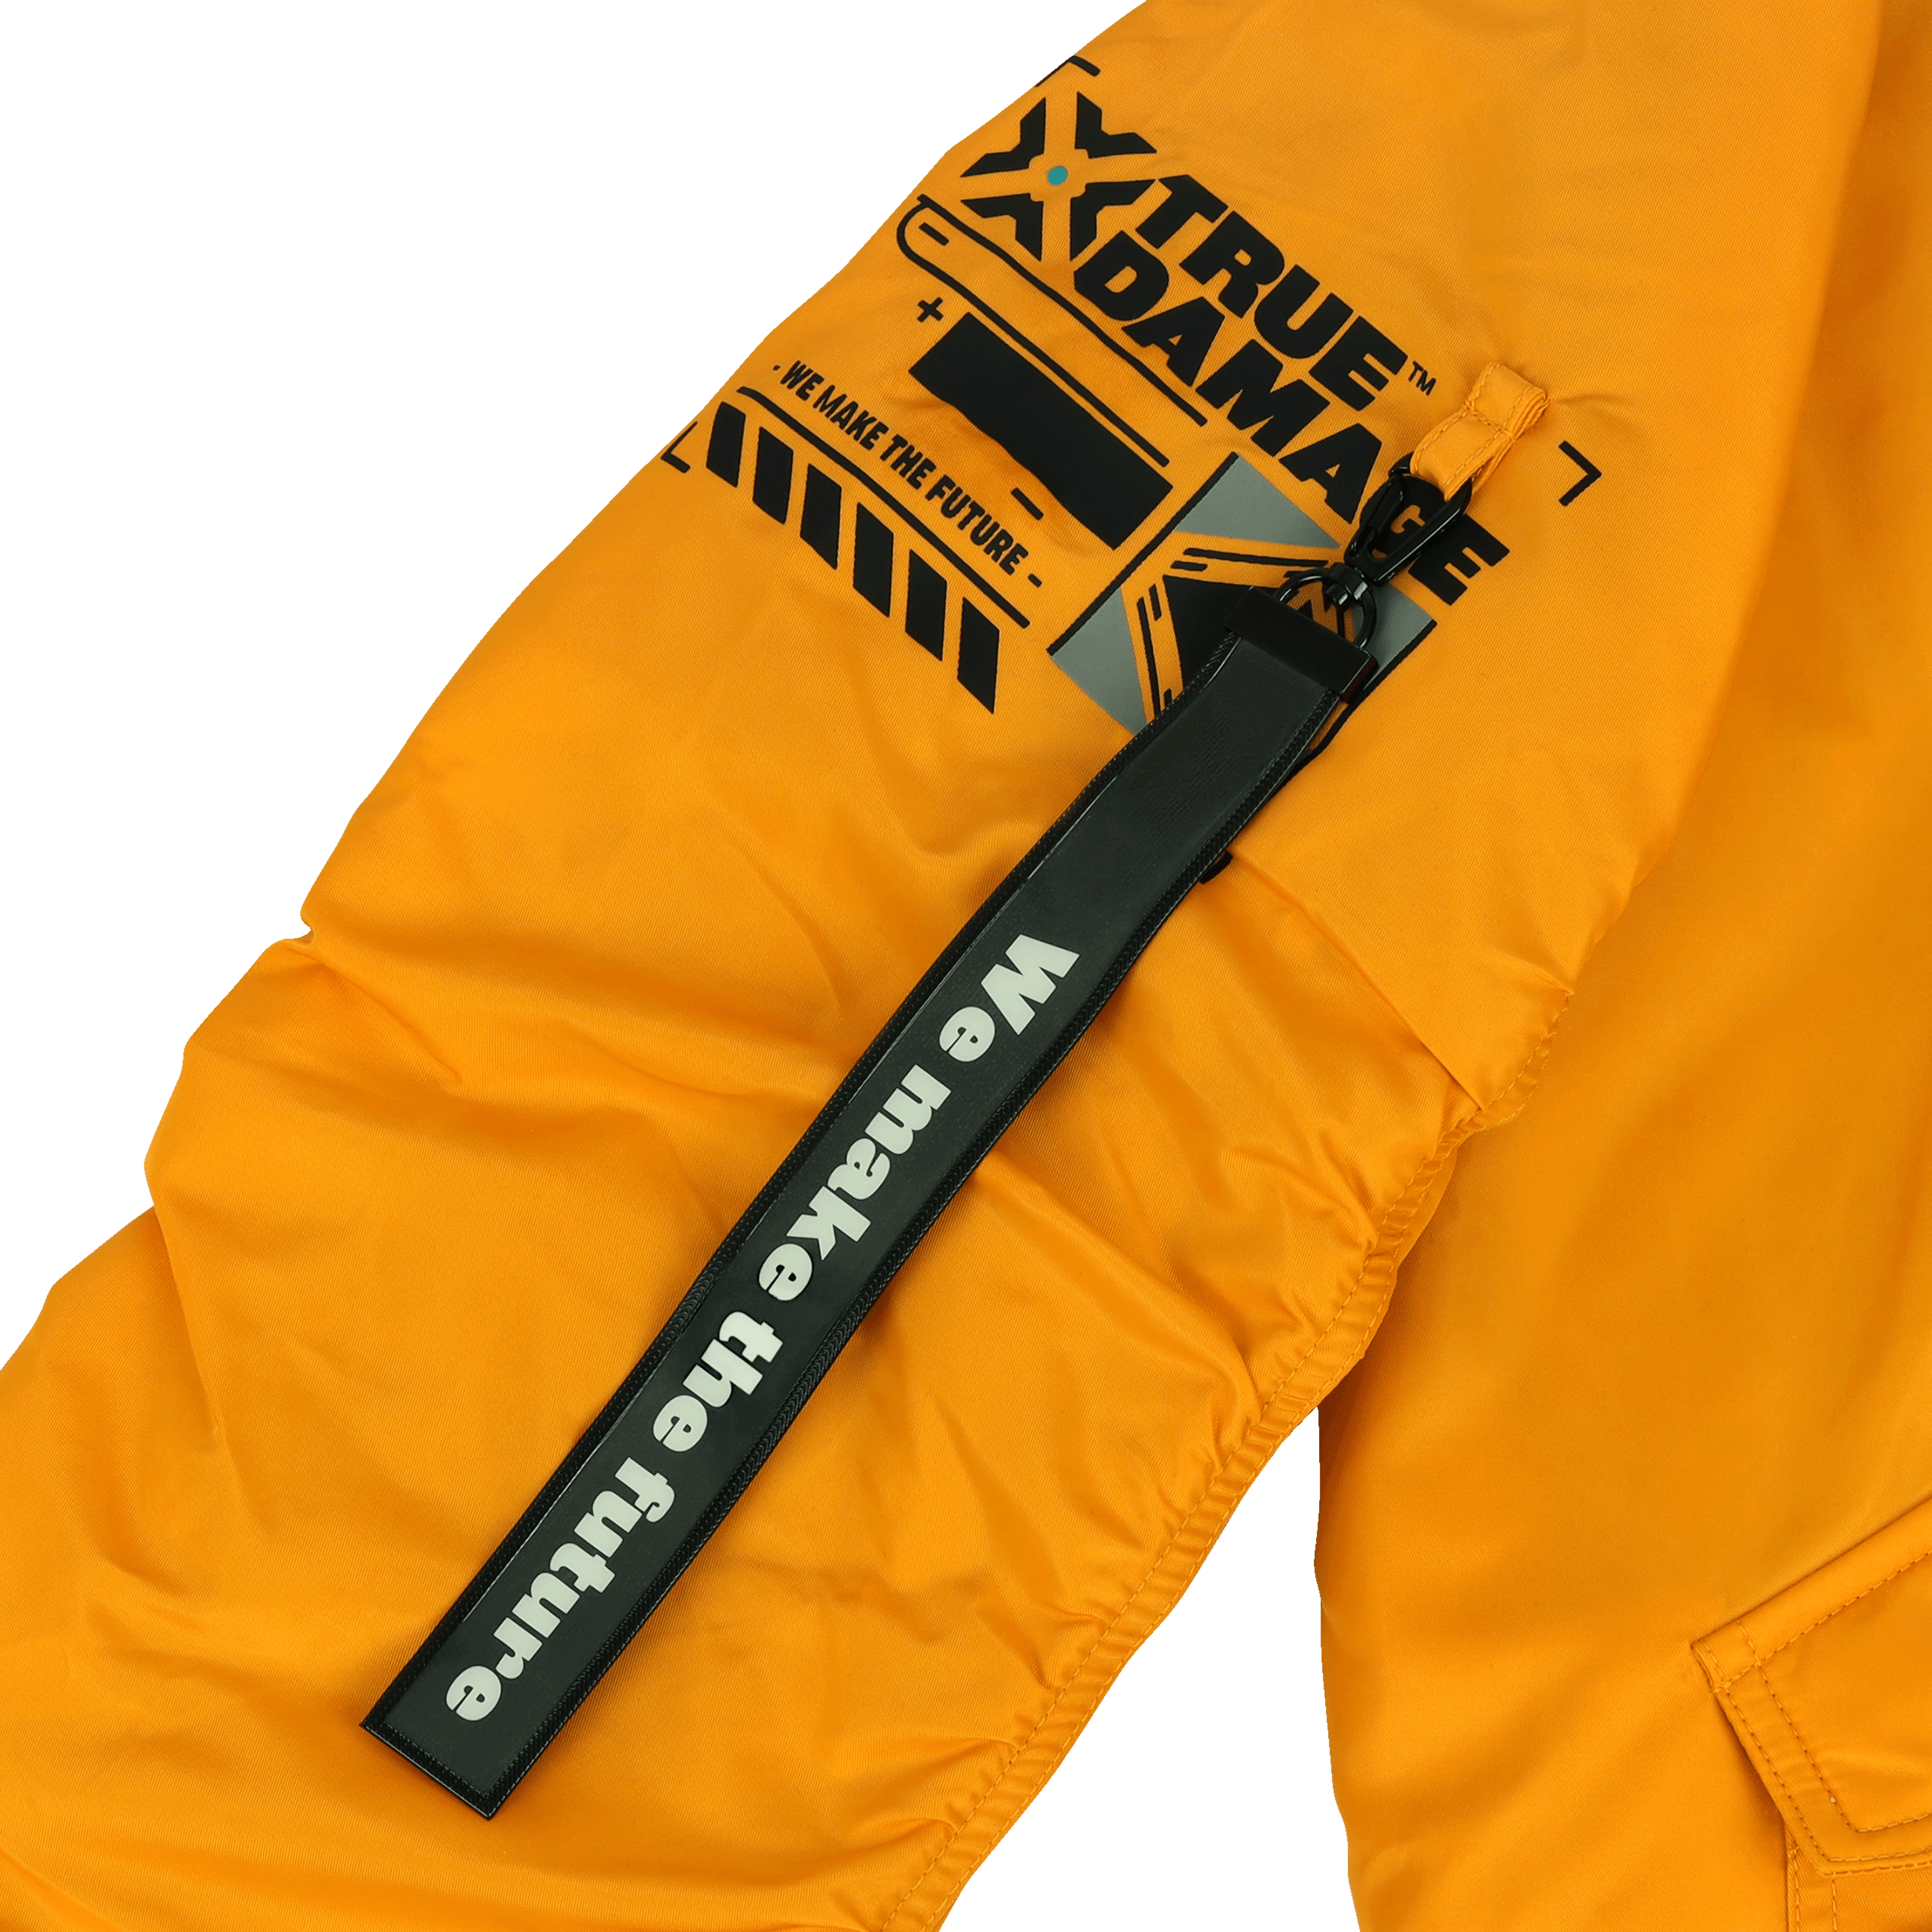 True Damage Ekko Street Style Jacket (Yellow)